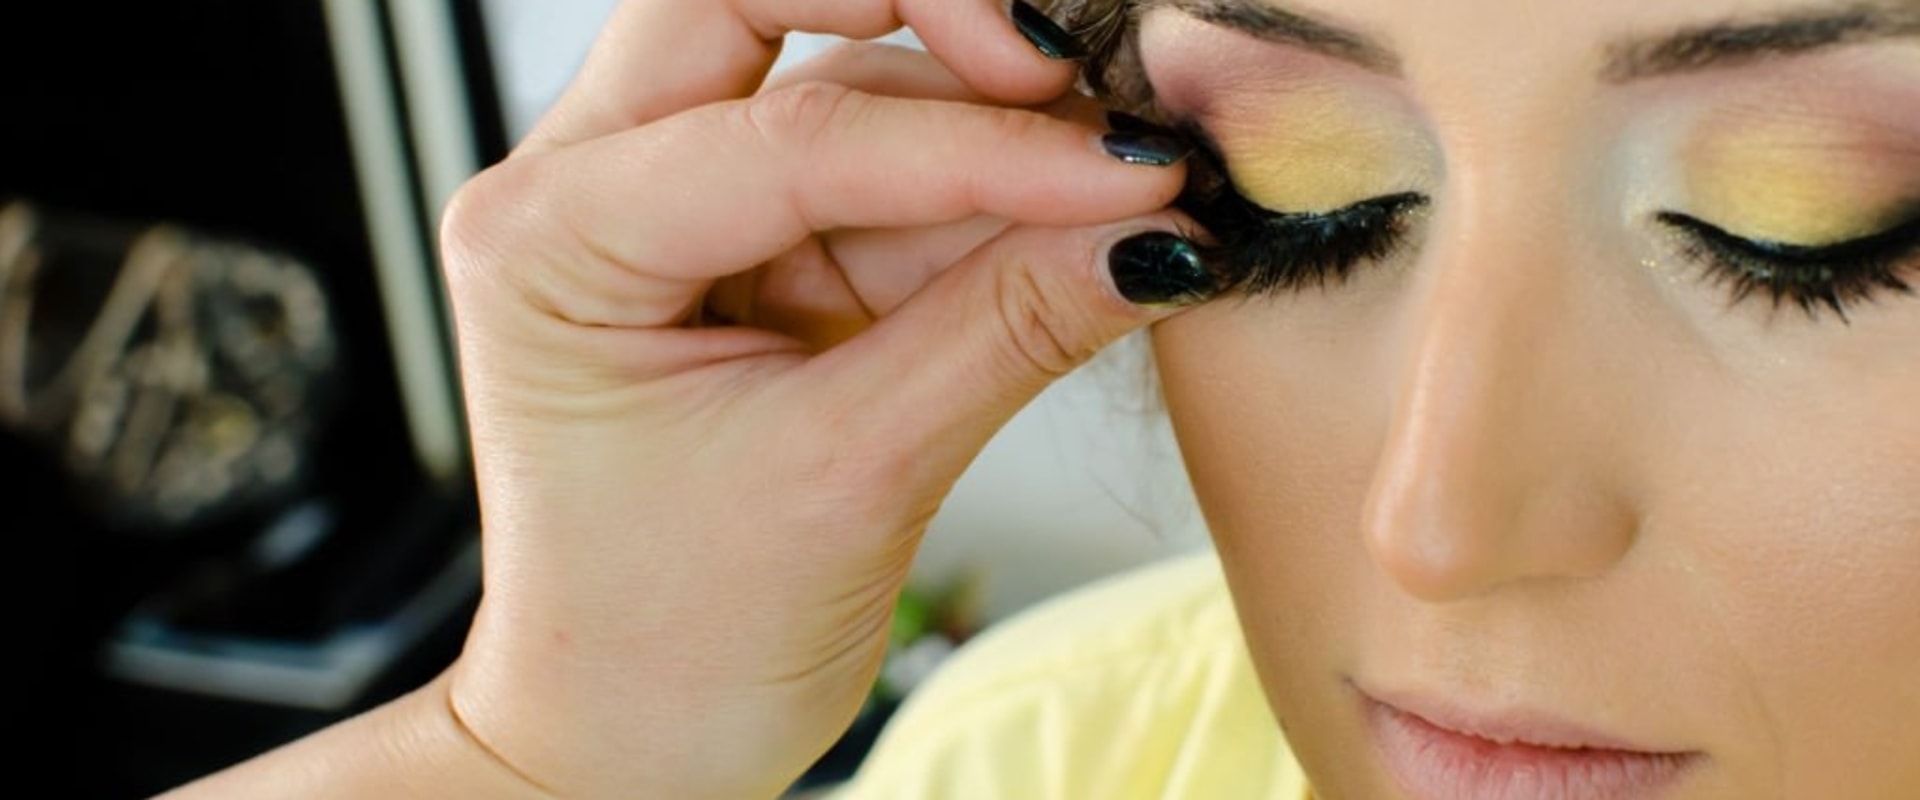 Can u reuse magnetic eyelashes?